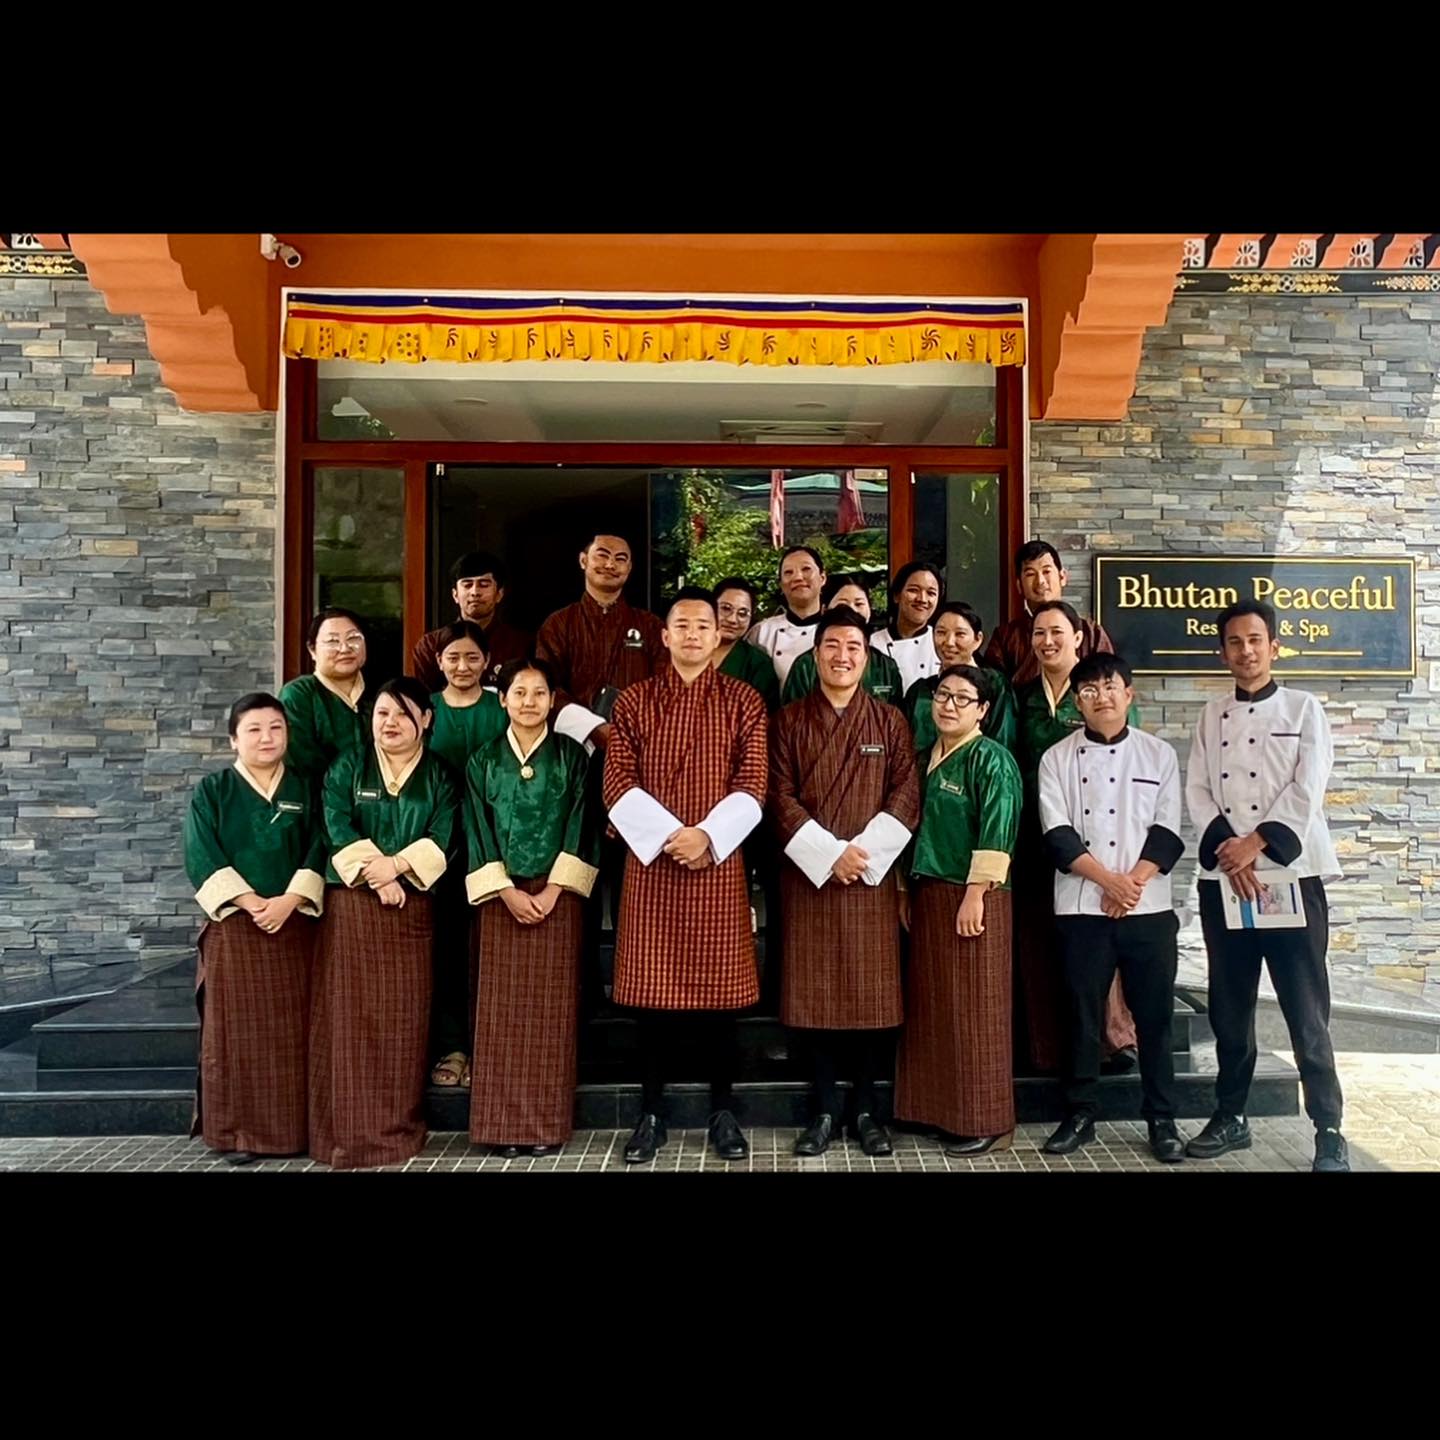 Bhutan Peaceful Residency & Spa